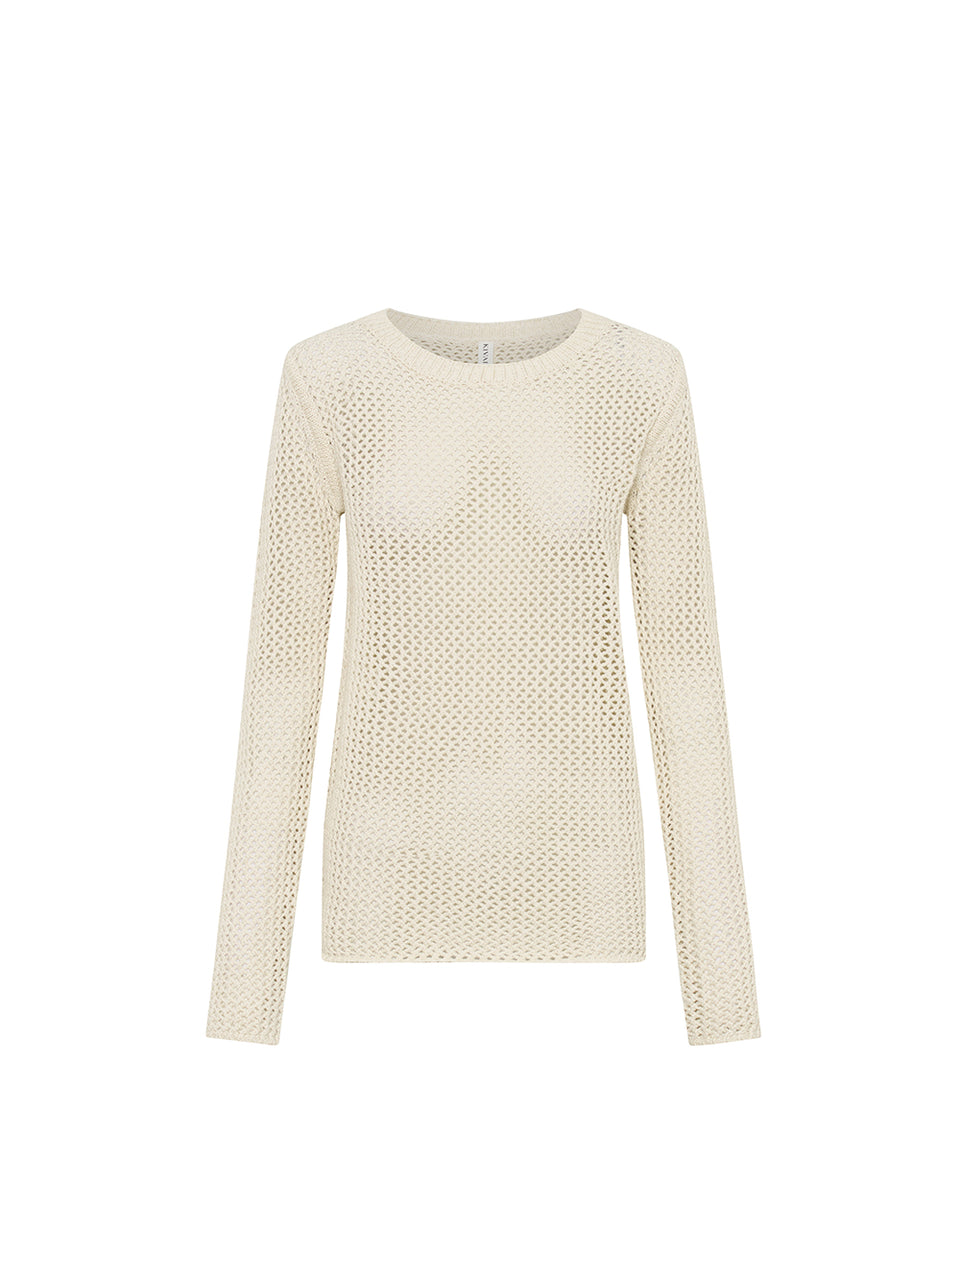 Eliana Knit Cream KIVARI | Cream knit top